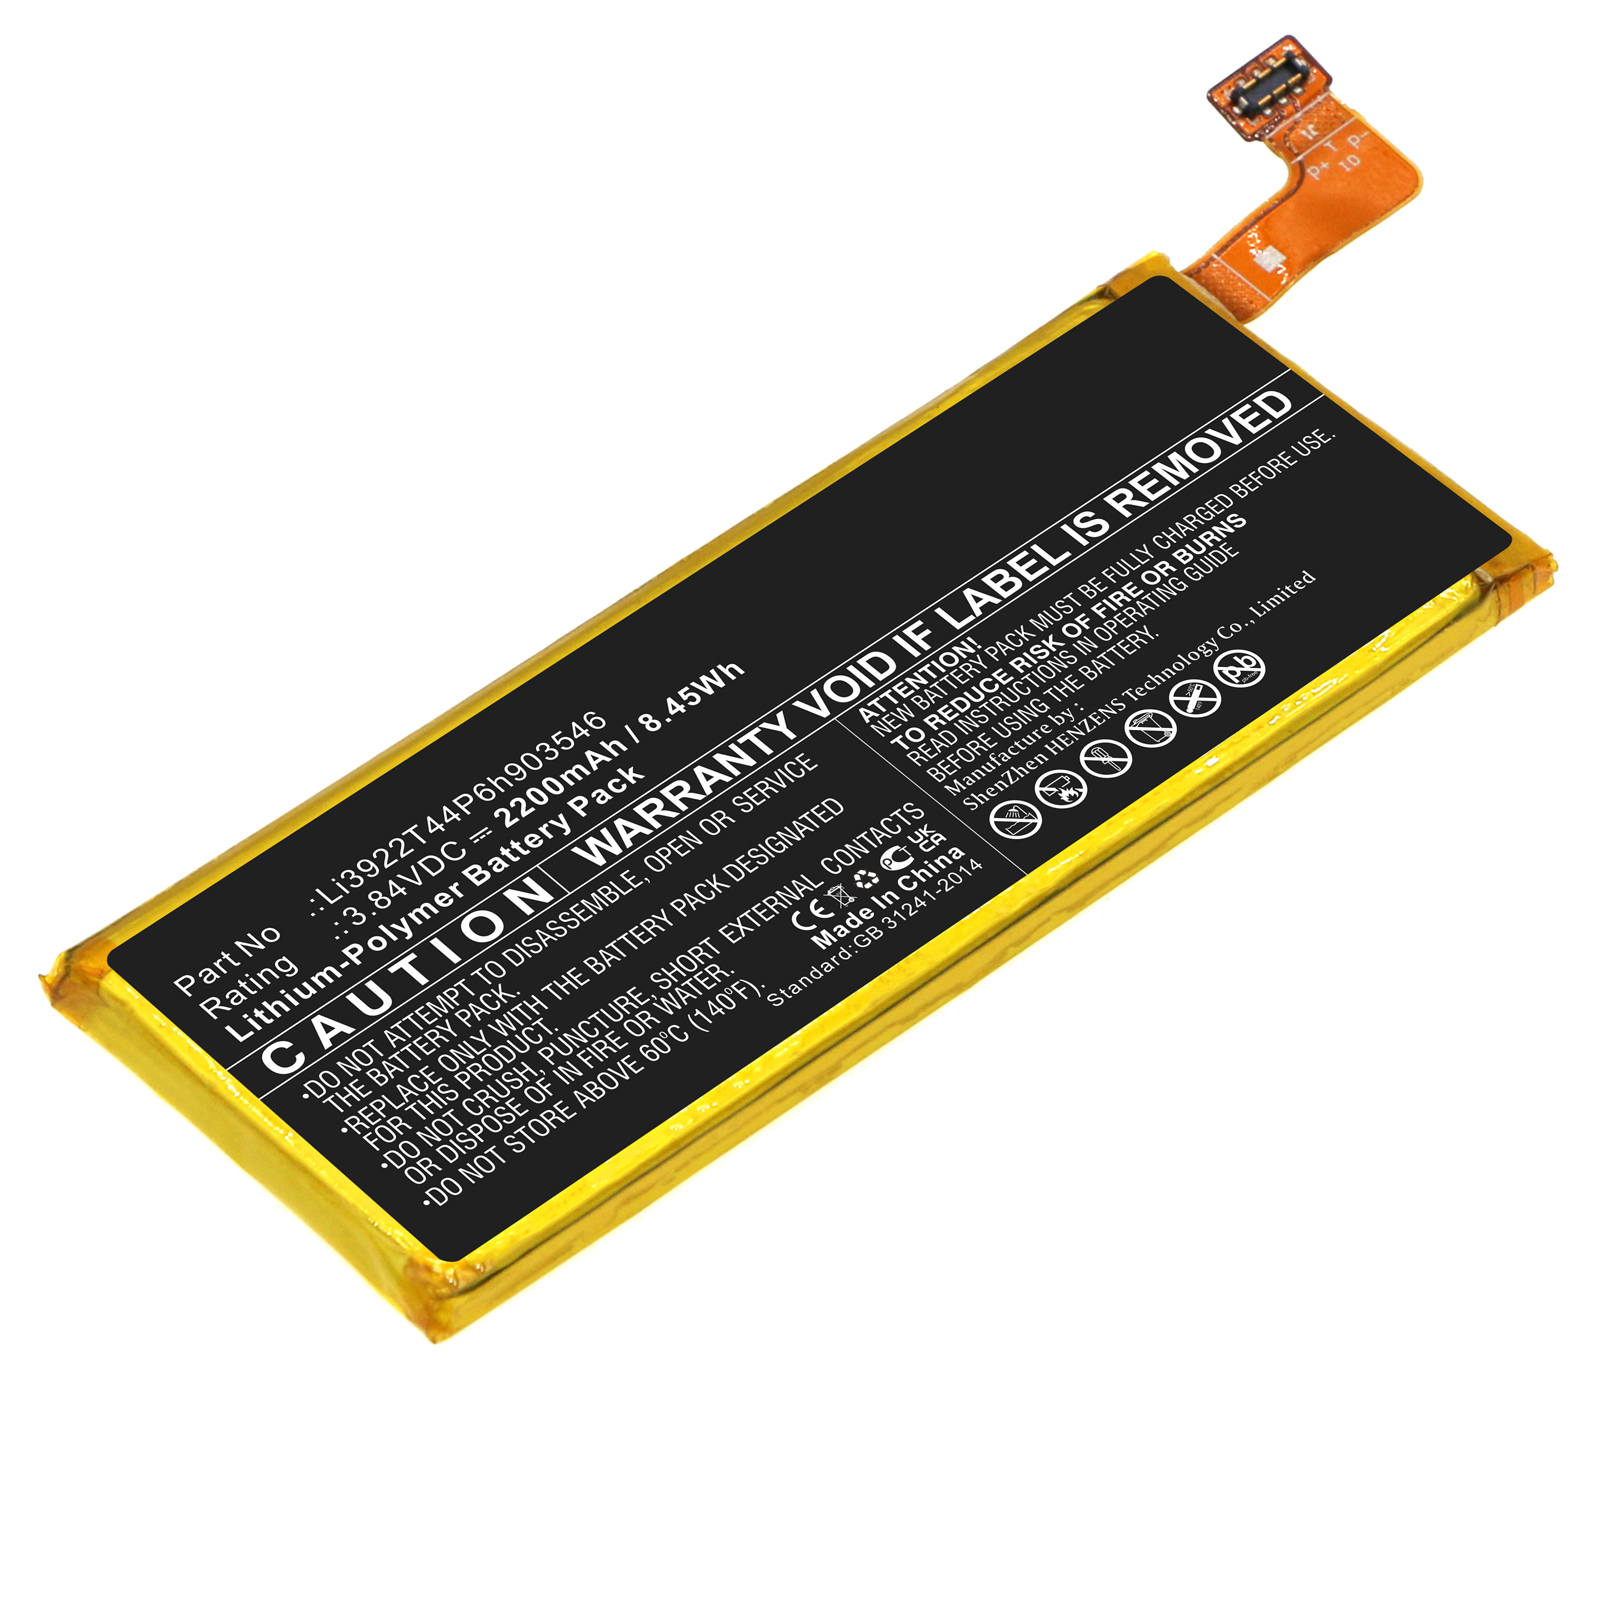 Synergy Digital Wifi Hotspot Battery, Compatible with ZTE Li3922T44P6h903546 Wifi Hotspot Battery (Li-Pol, 3.84V, 2200mAh)